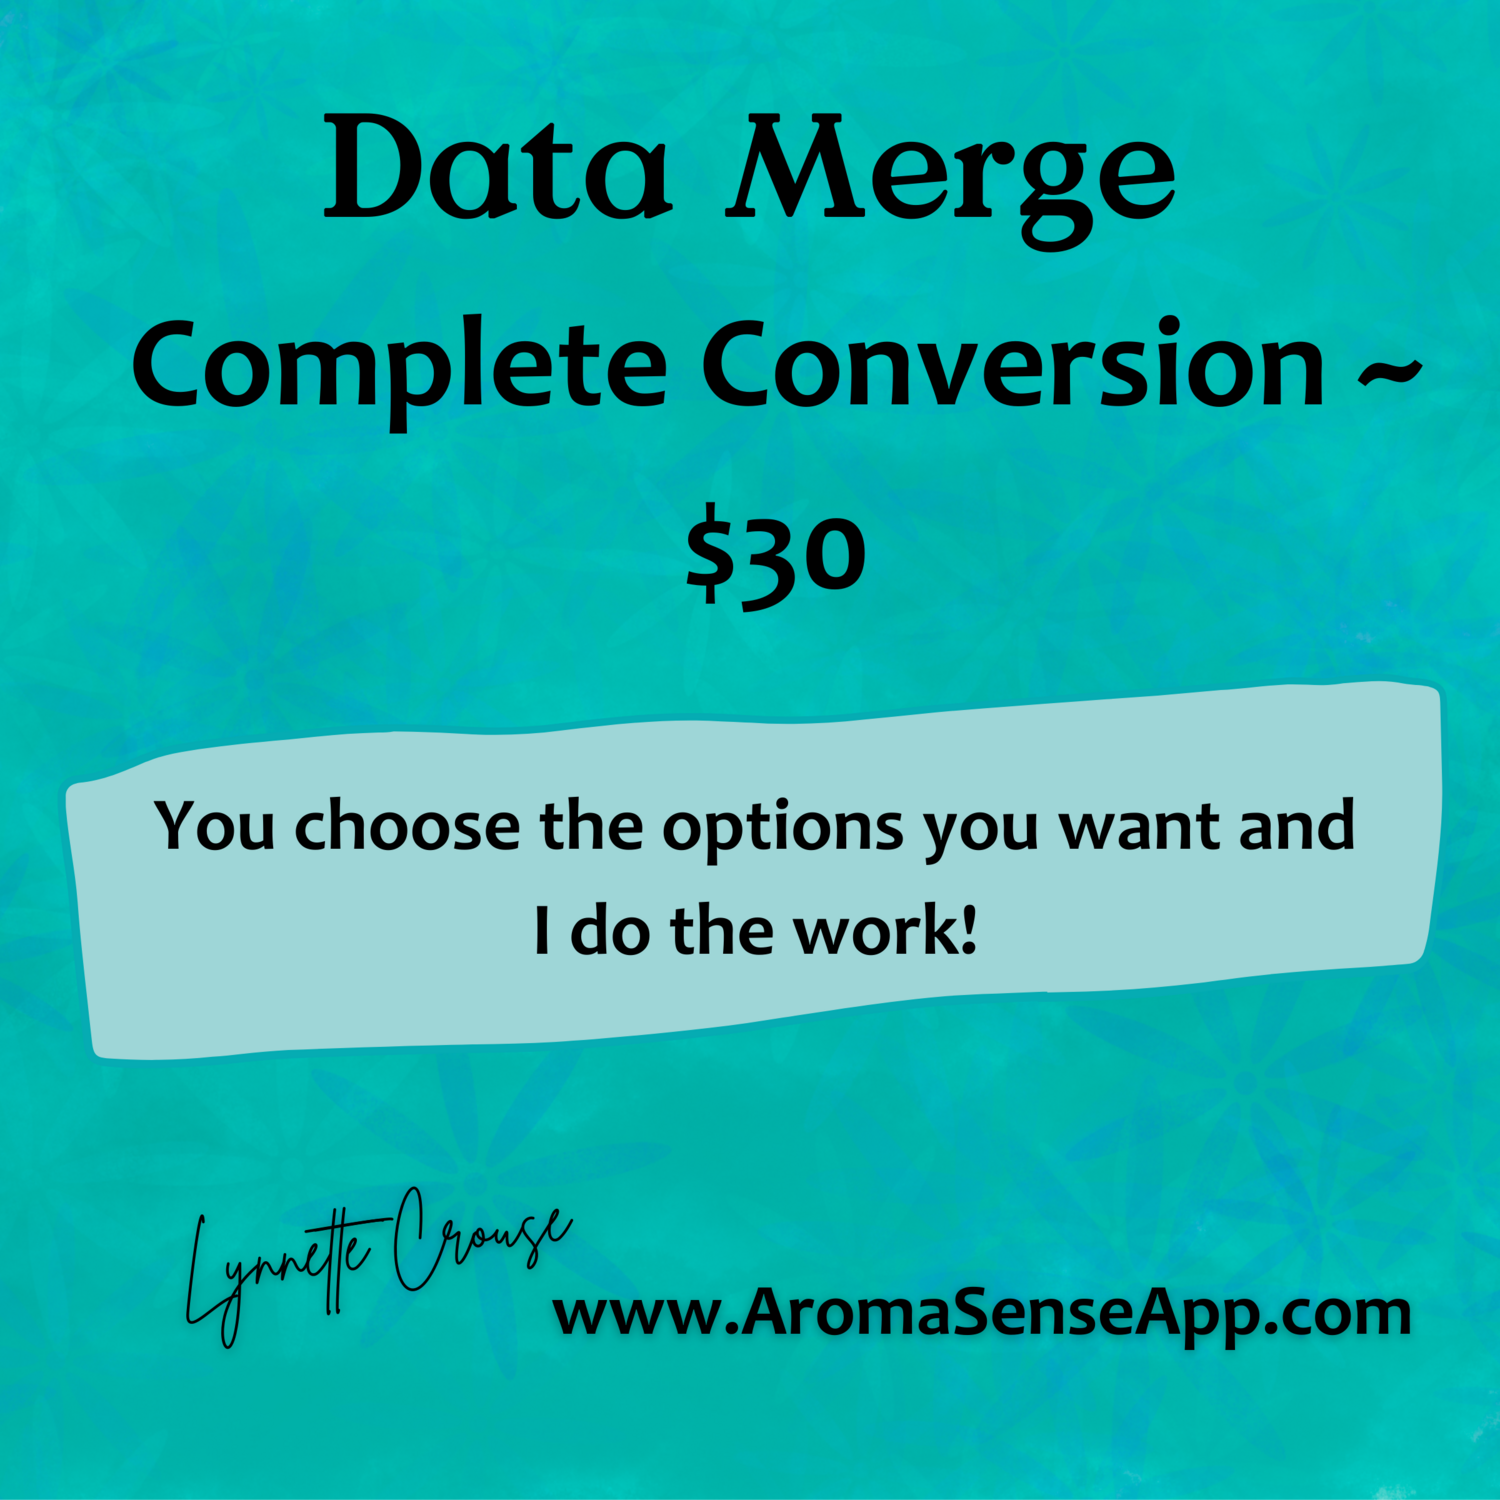 Data Merge Services